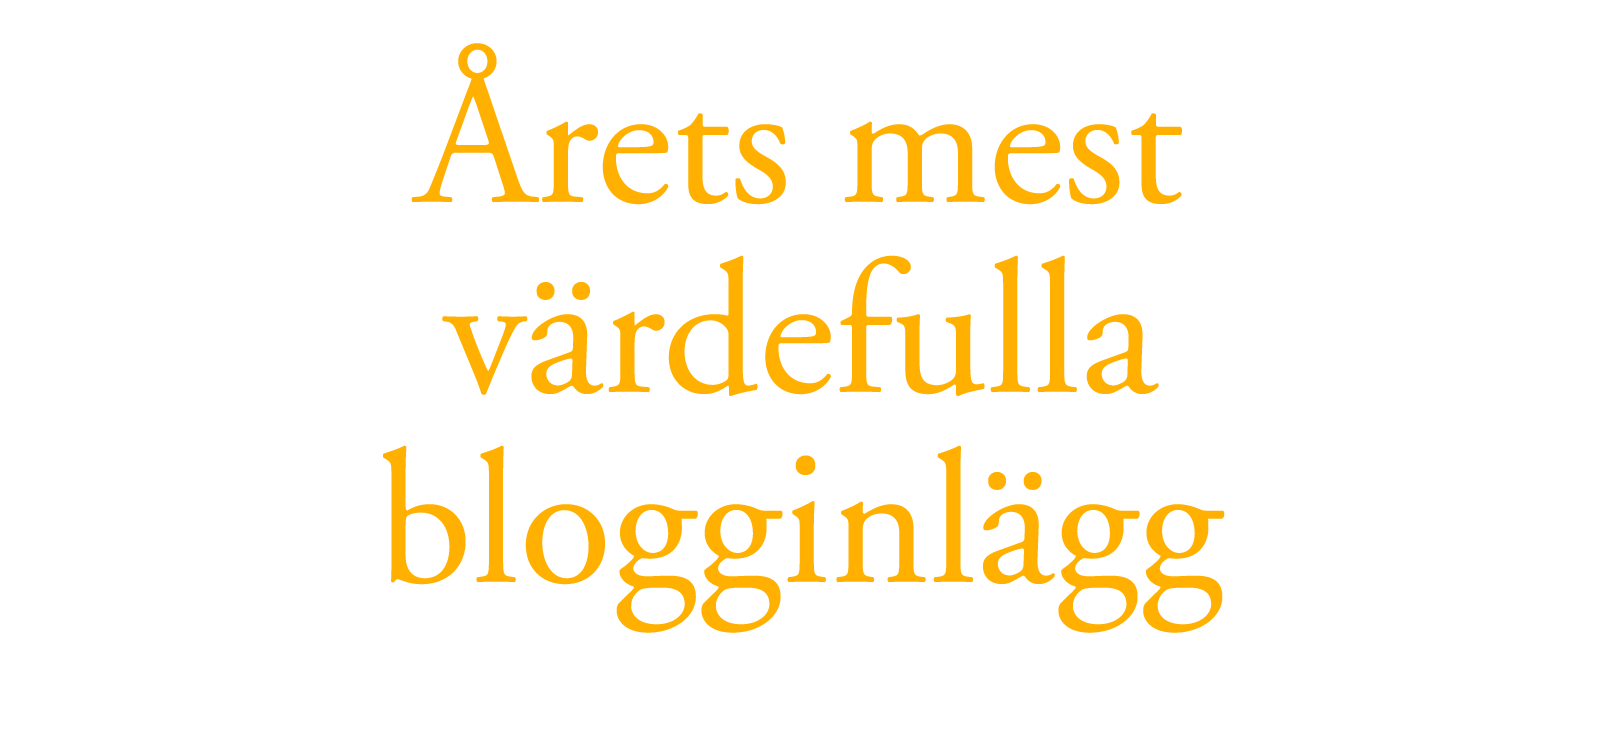 arets-blogginlagg